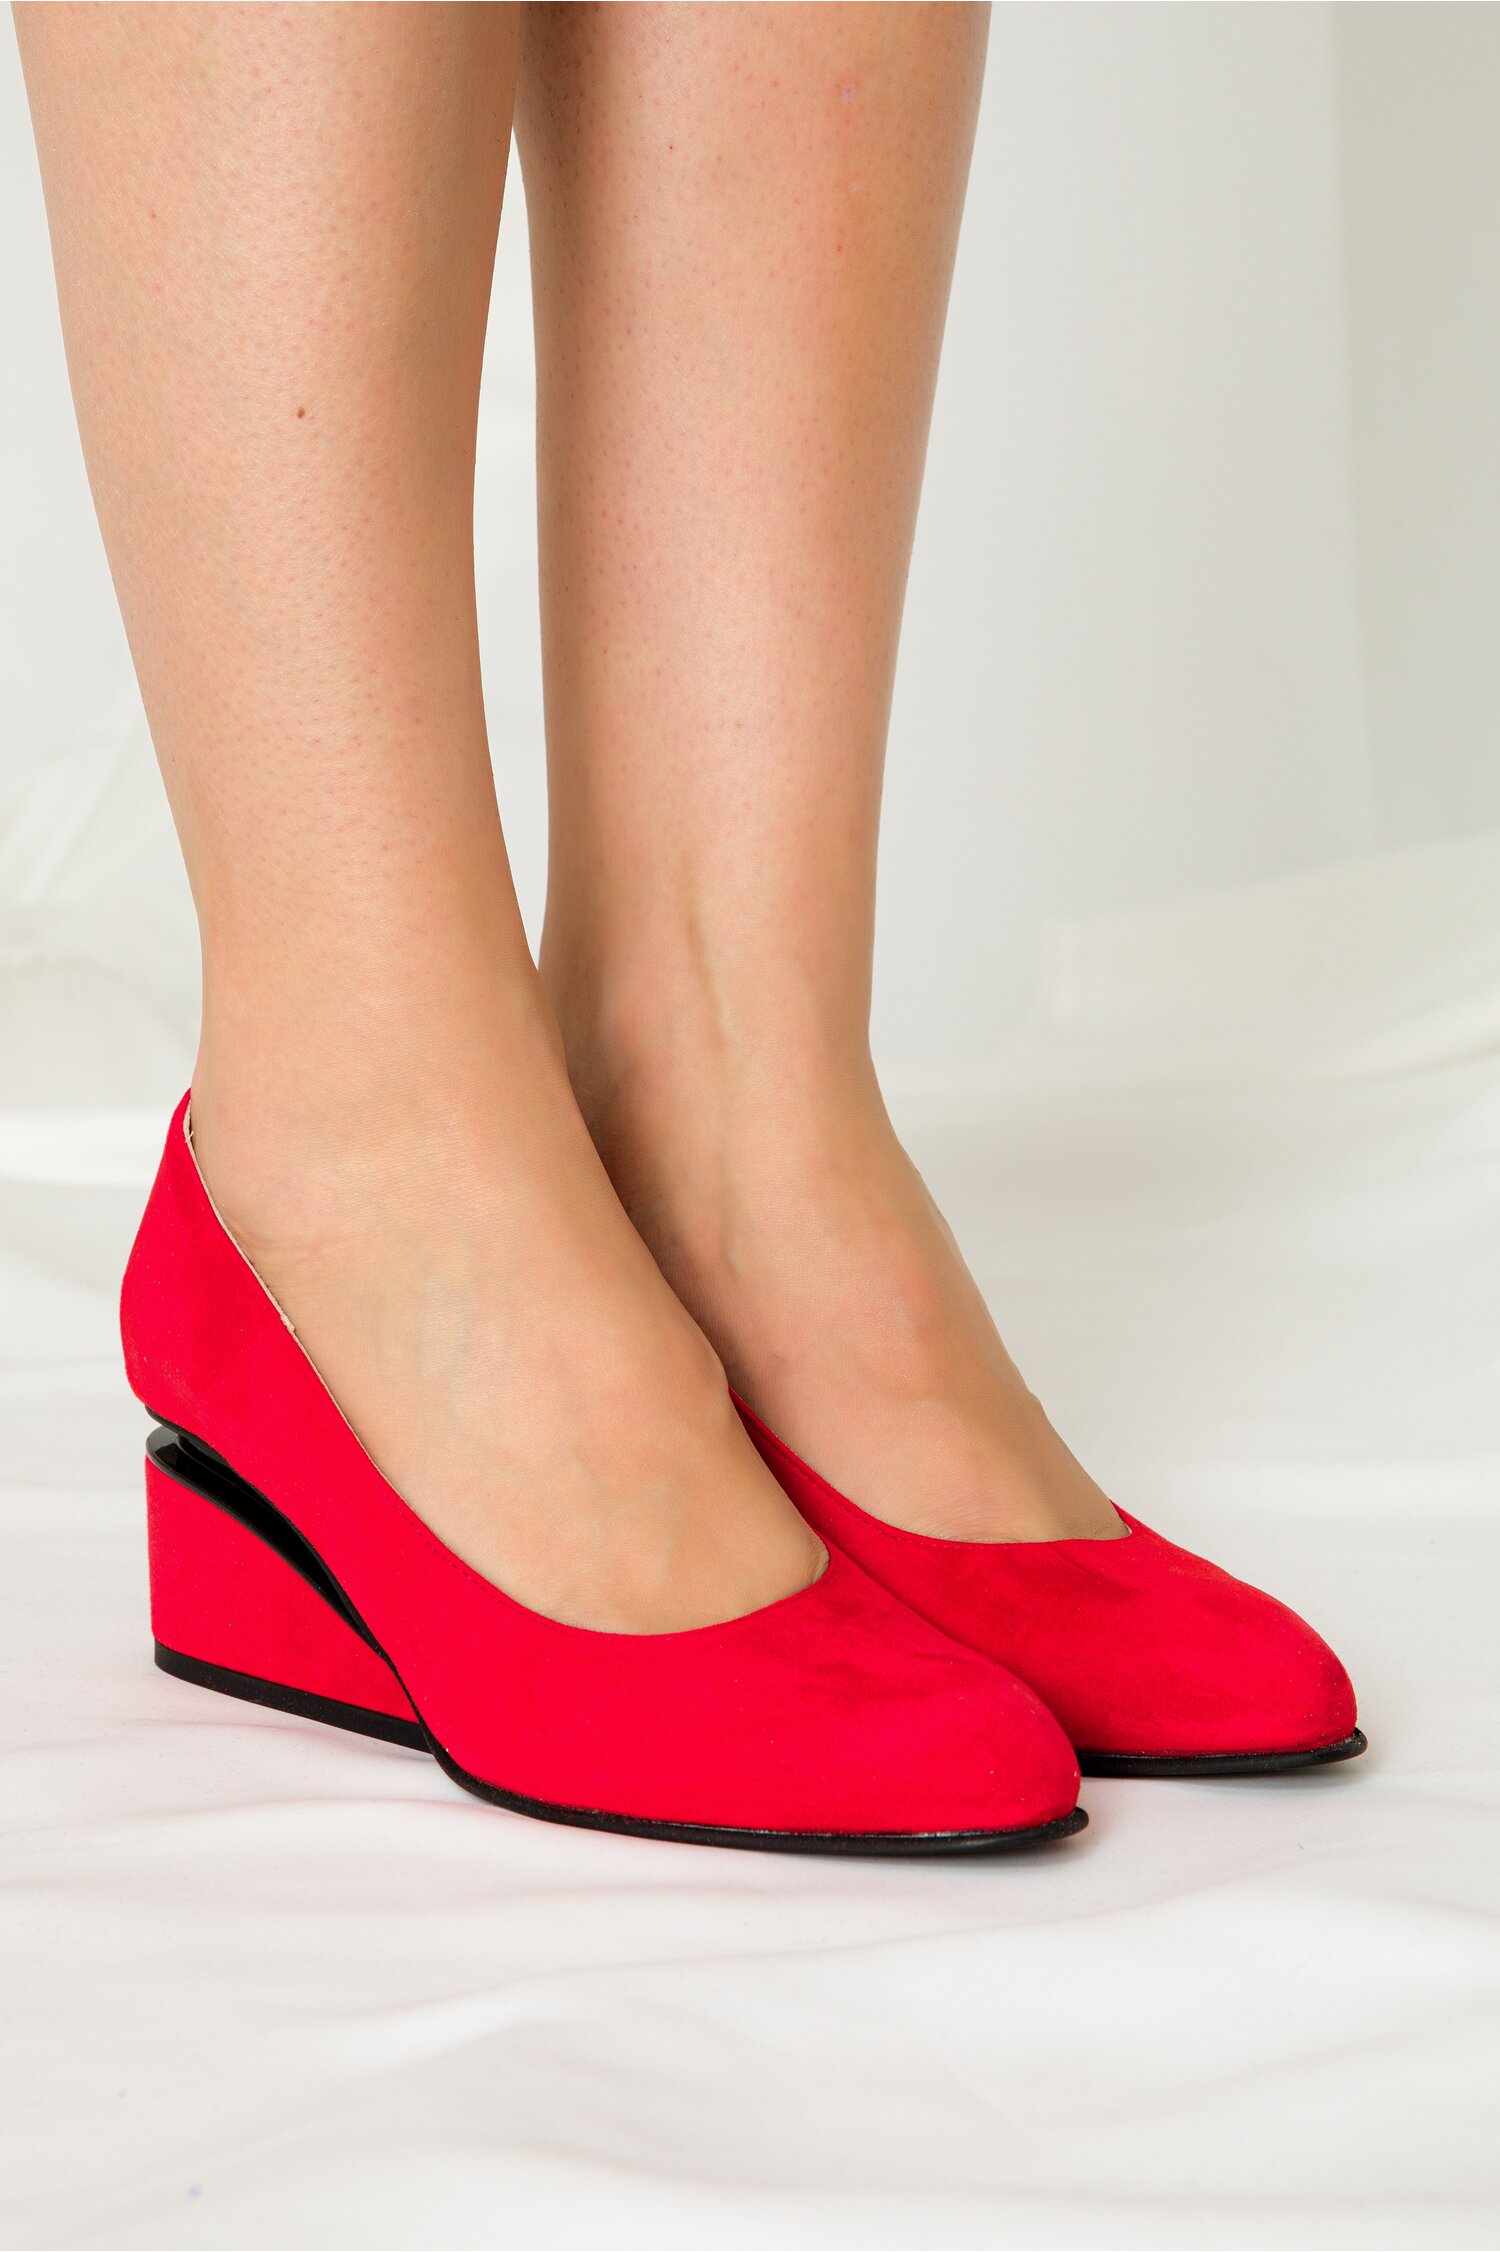 Pantofi rosii cu toc futurist din piele intoarsa dyfashion.ro imagine 2022 13clothing.ro